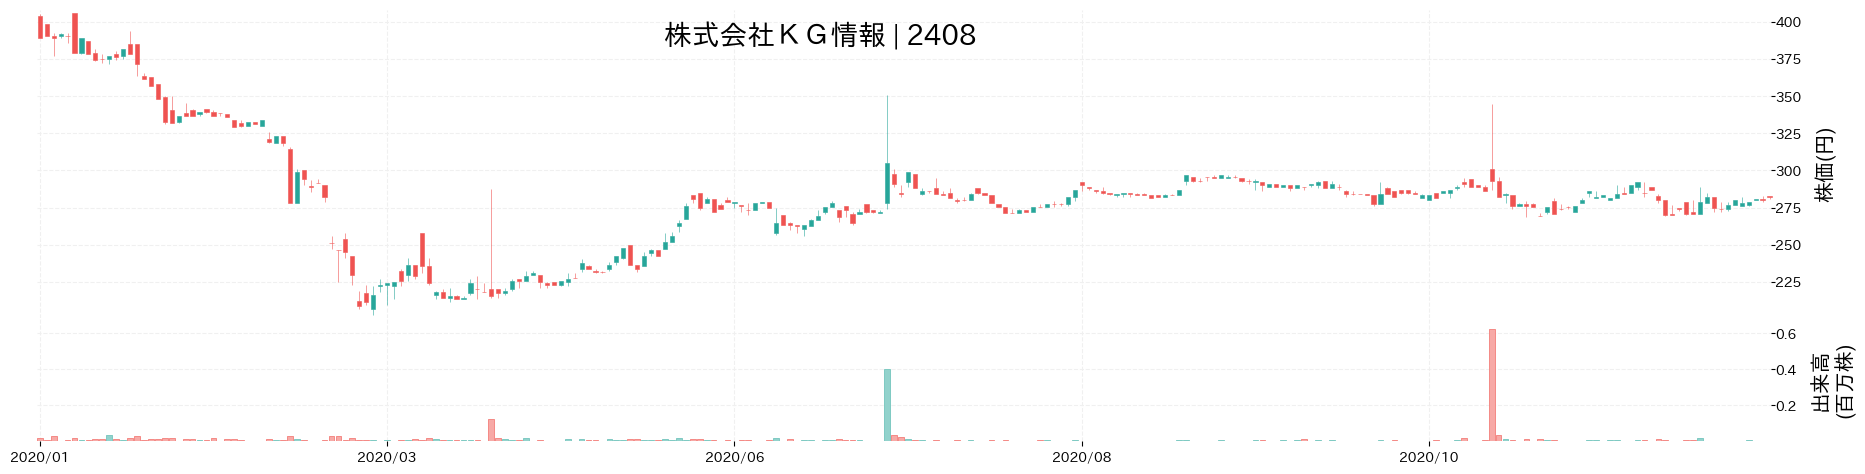 KG情報の株価推移(2020)